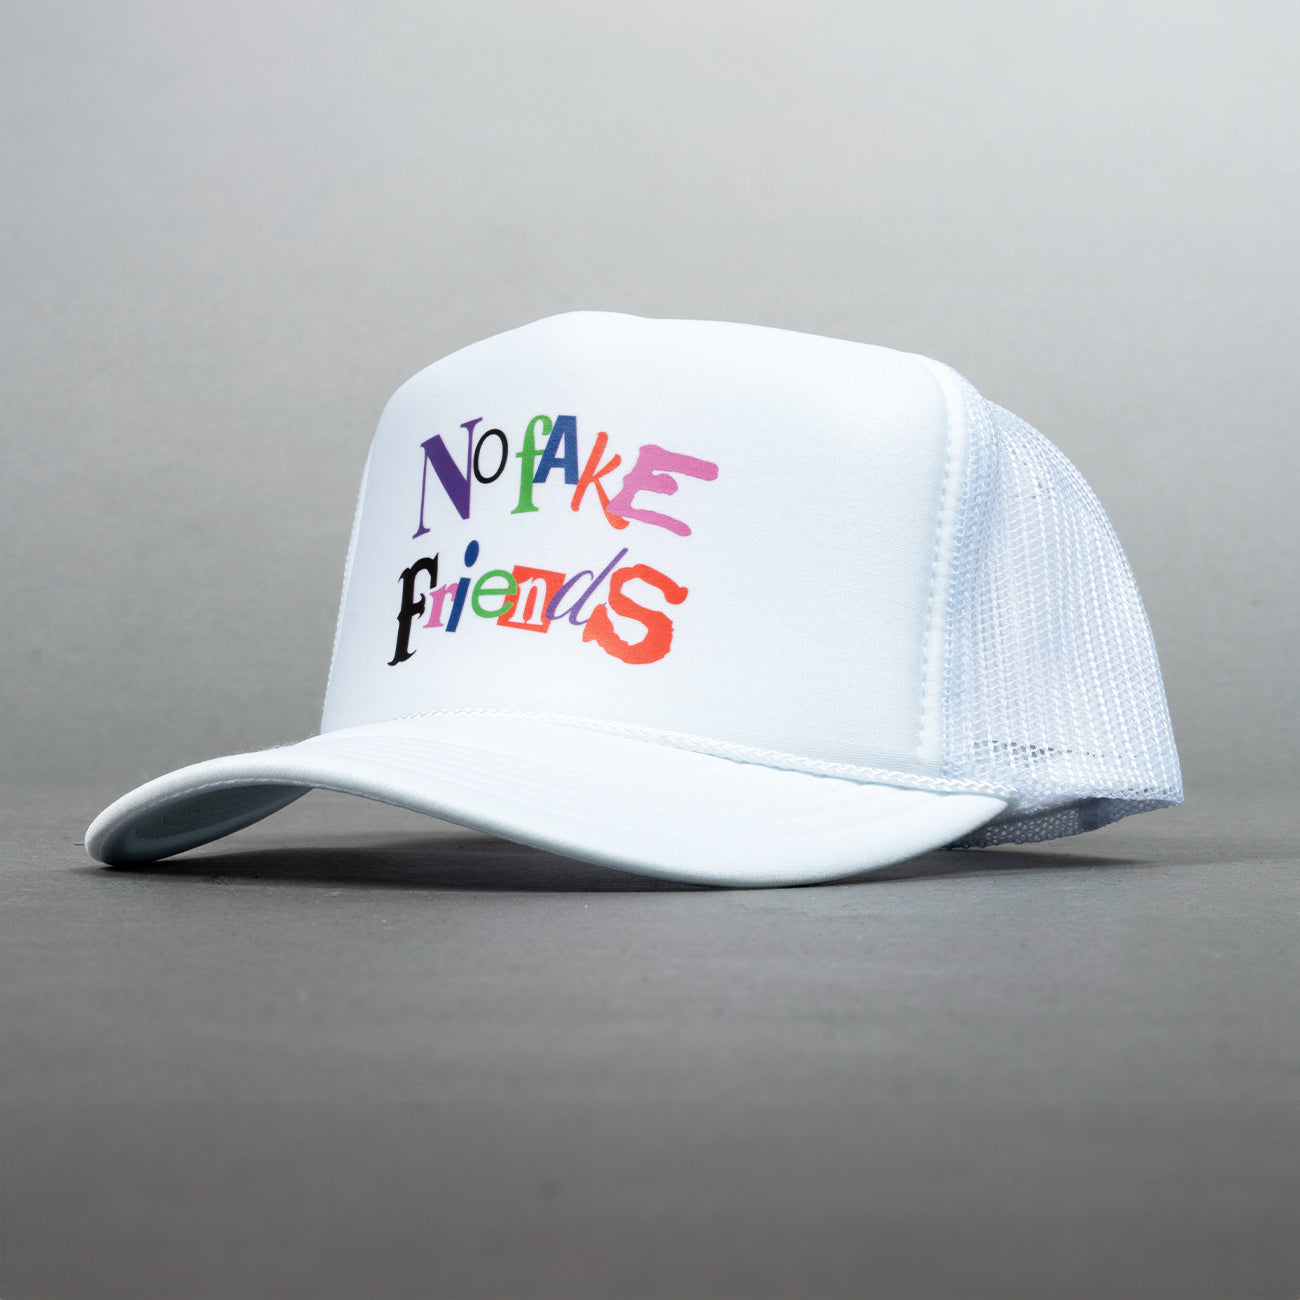 No Fake Friends Trucker Hat - White